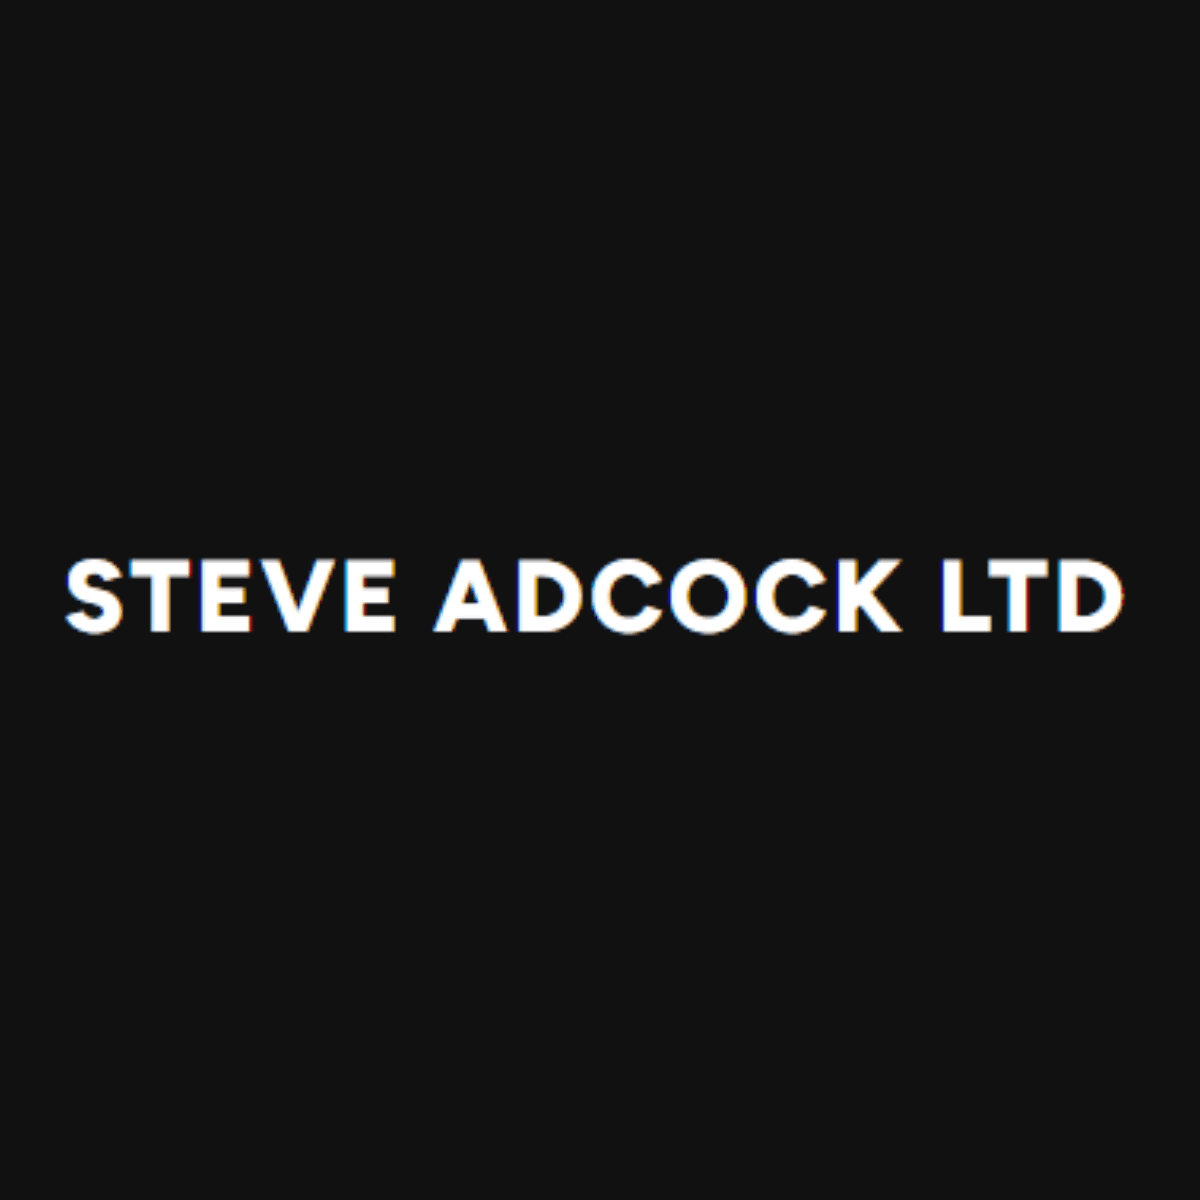 Images Steve Adcock Ltd